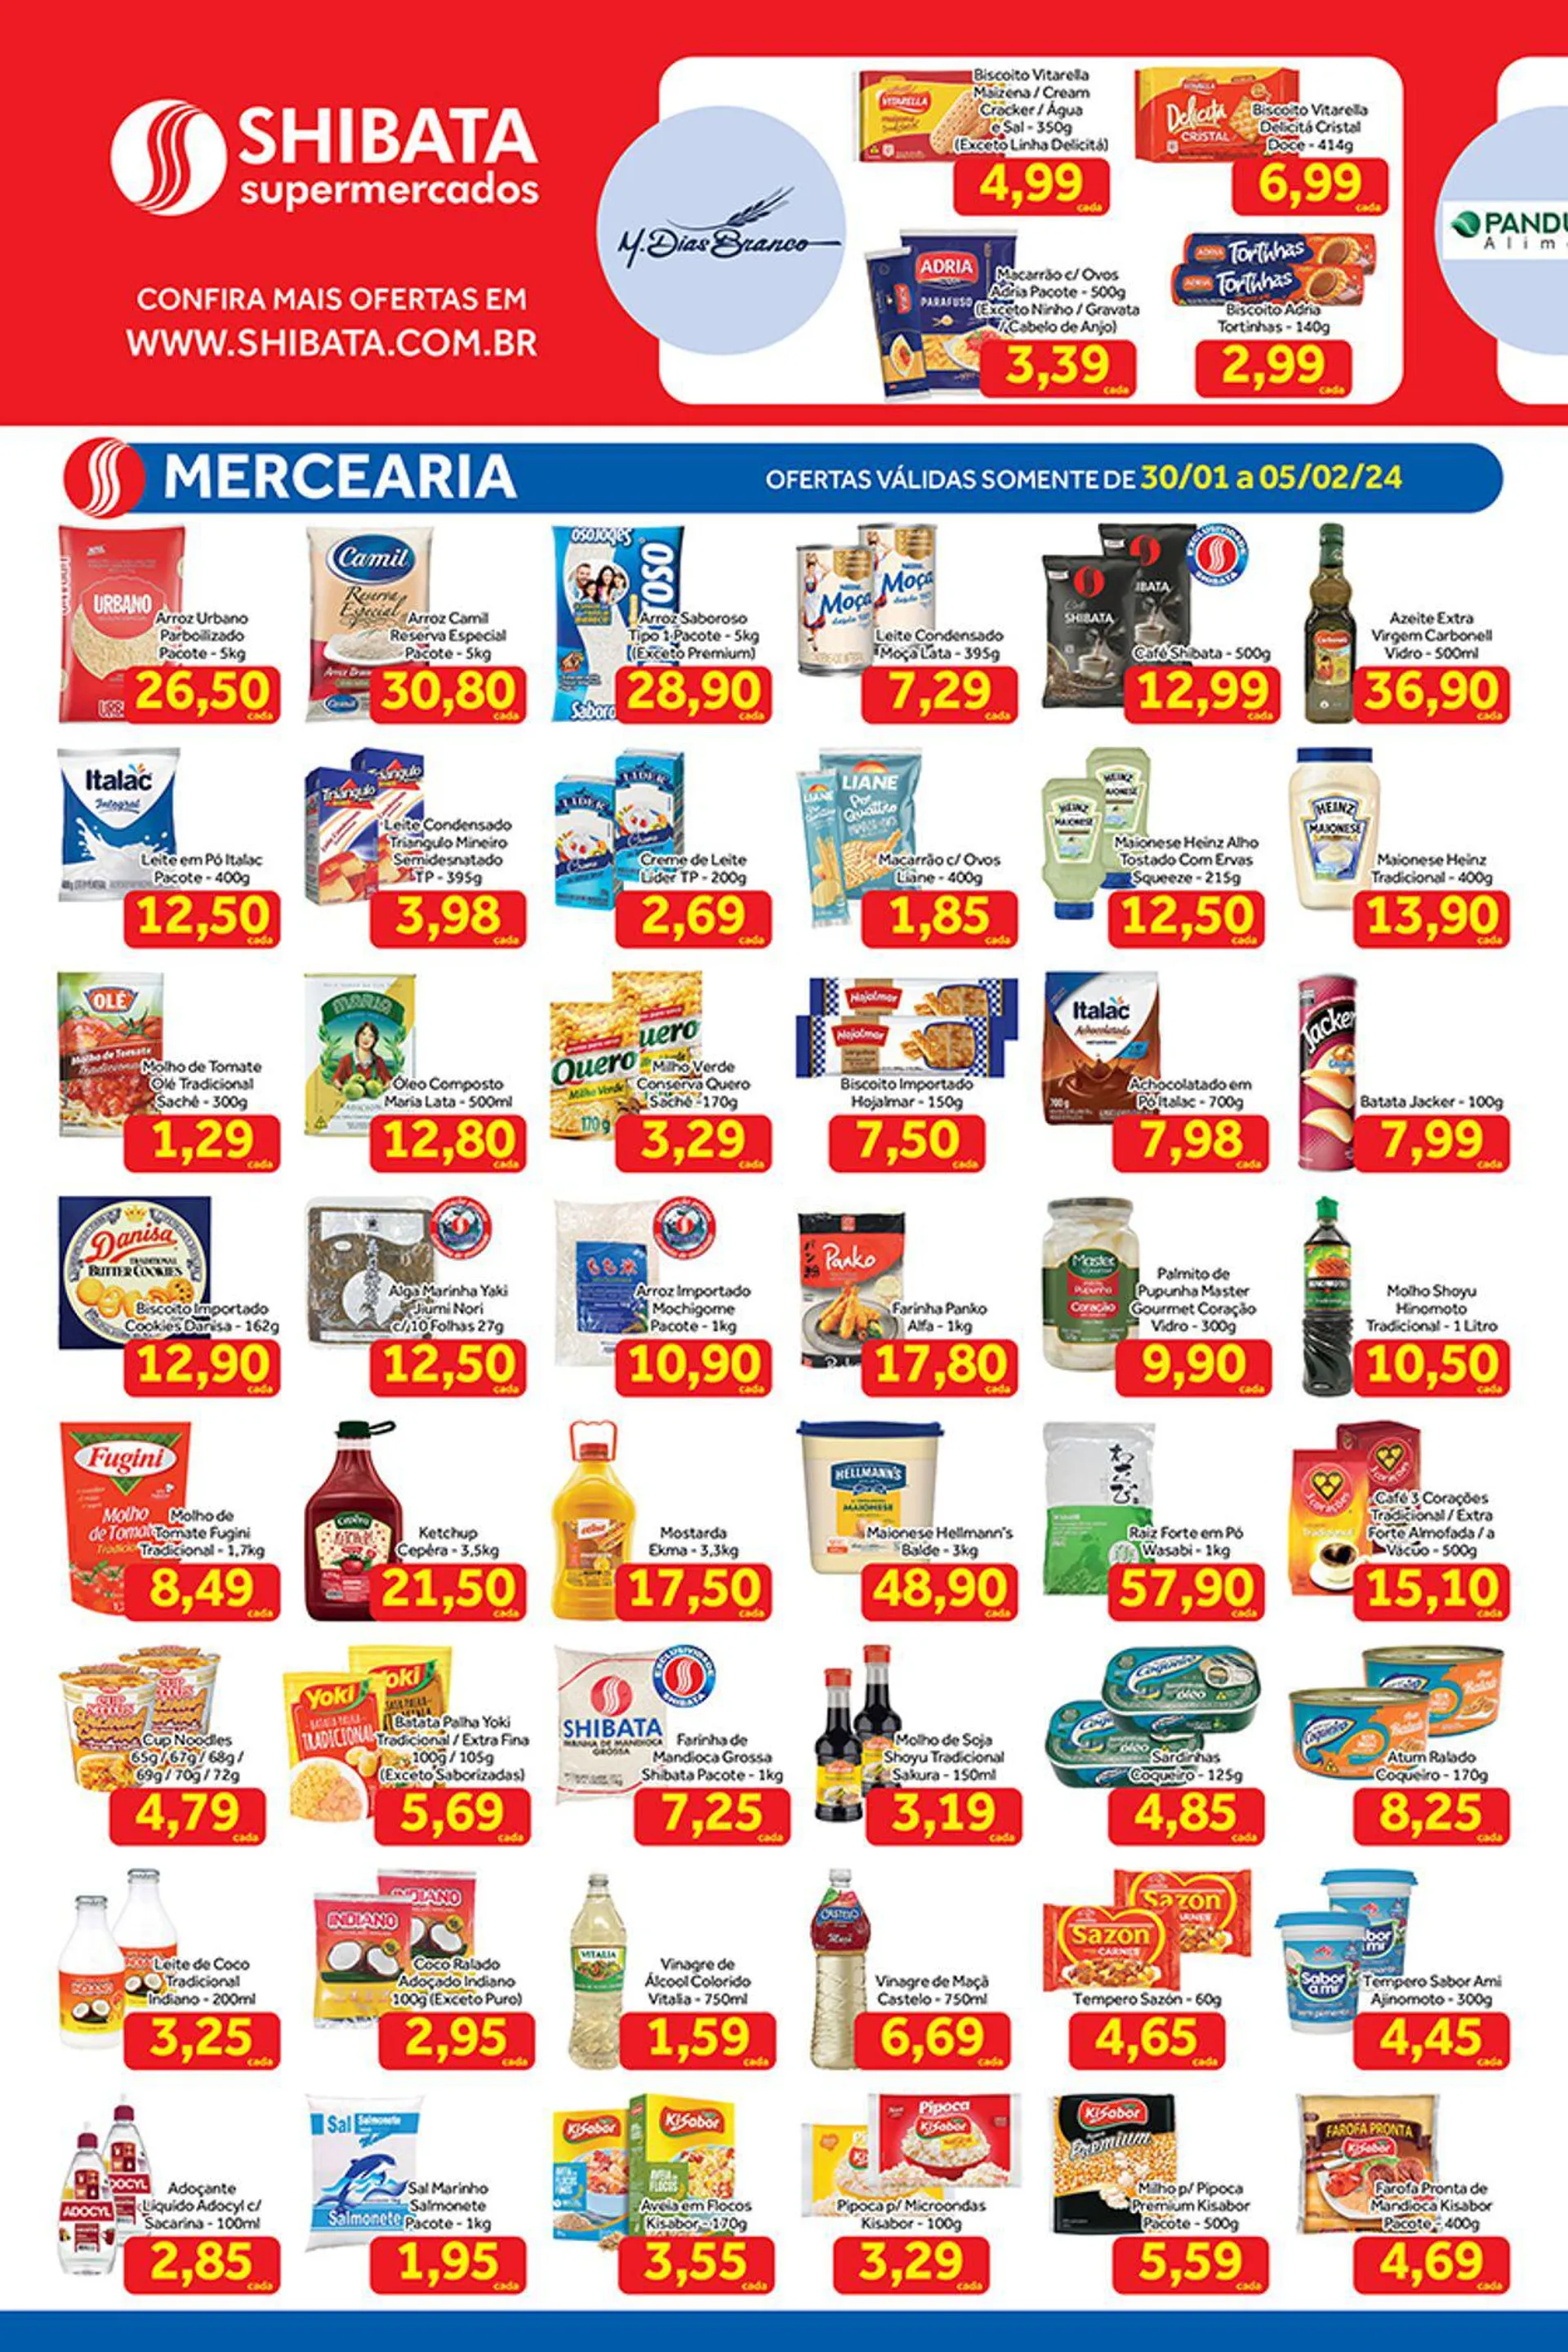 Encarte de Shibata Supermercados - Itaqua e Poá 1 de maio até 2 de dezembro 2024 - Pagina 2